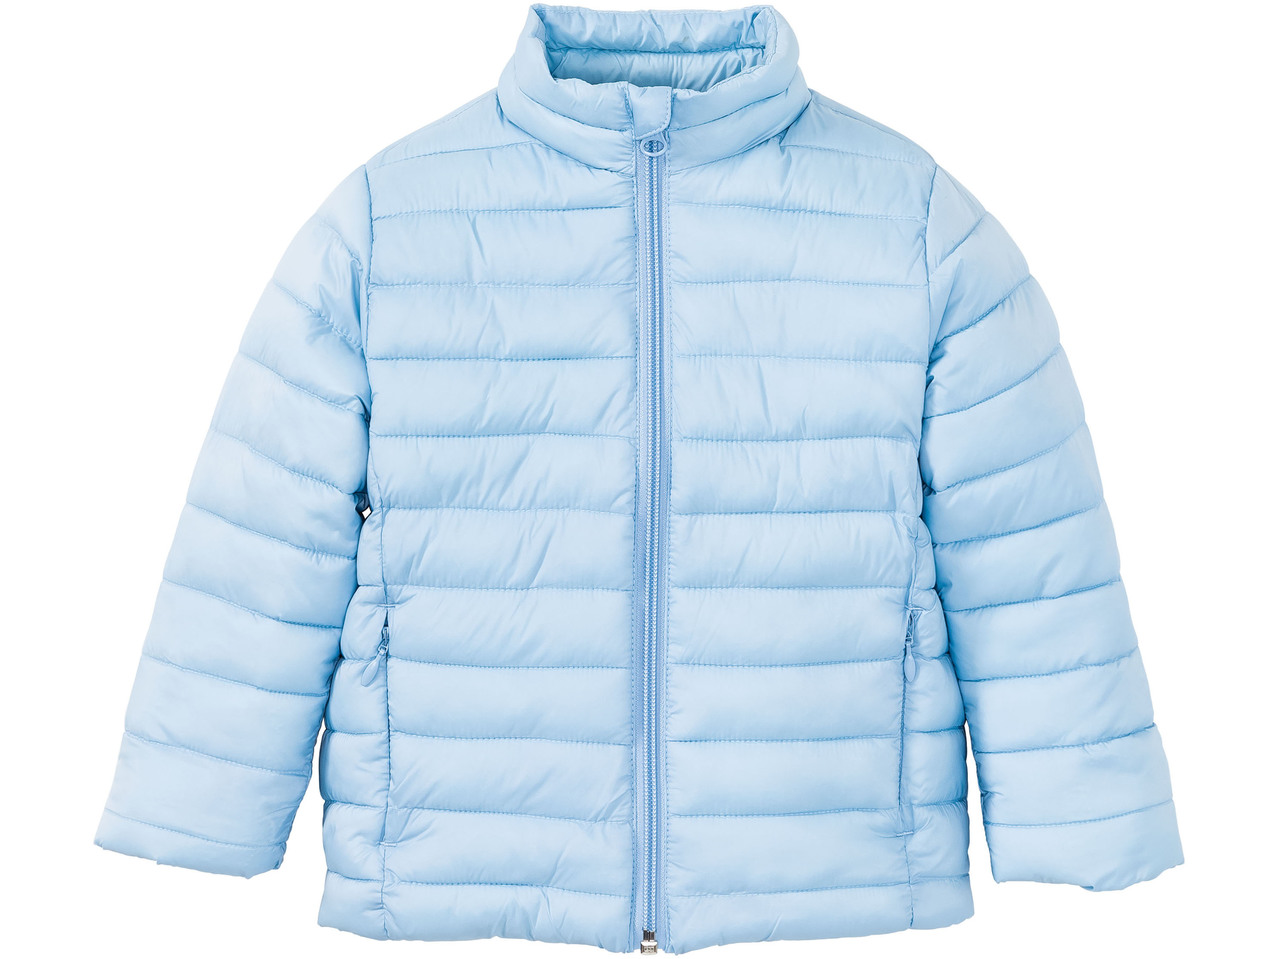 Kids' Lightweight Thermal Jacket